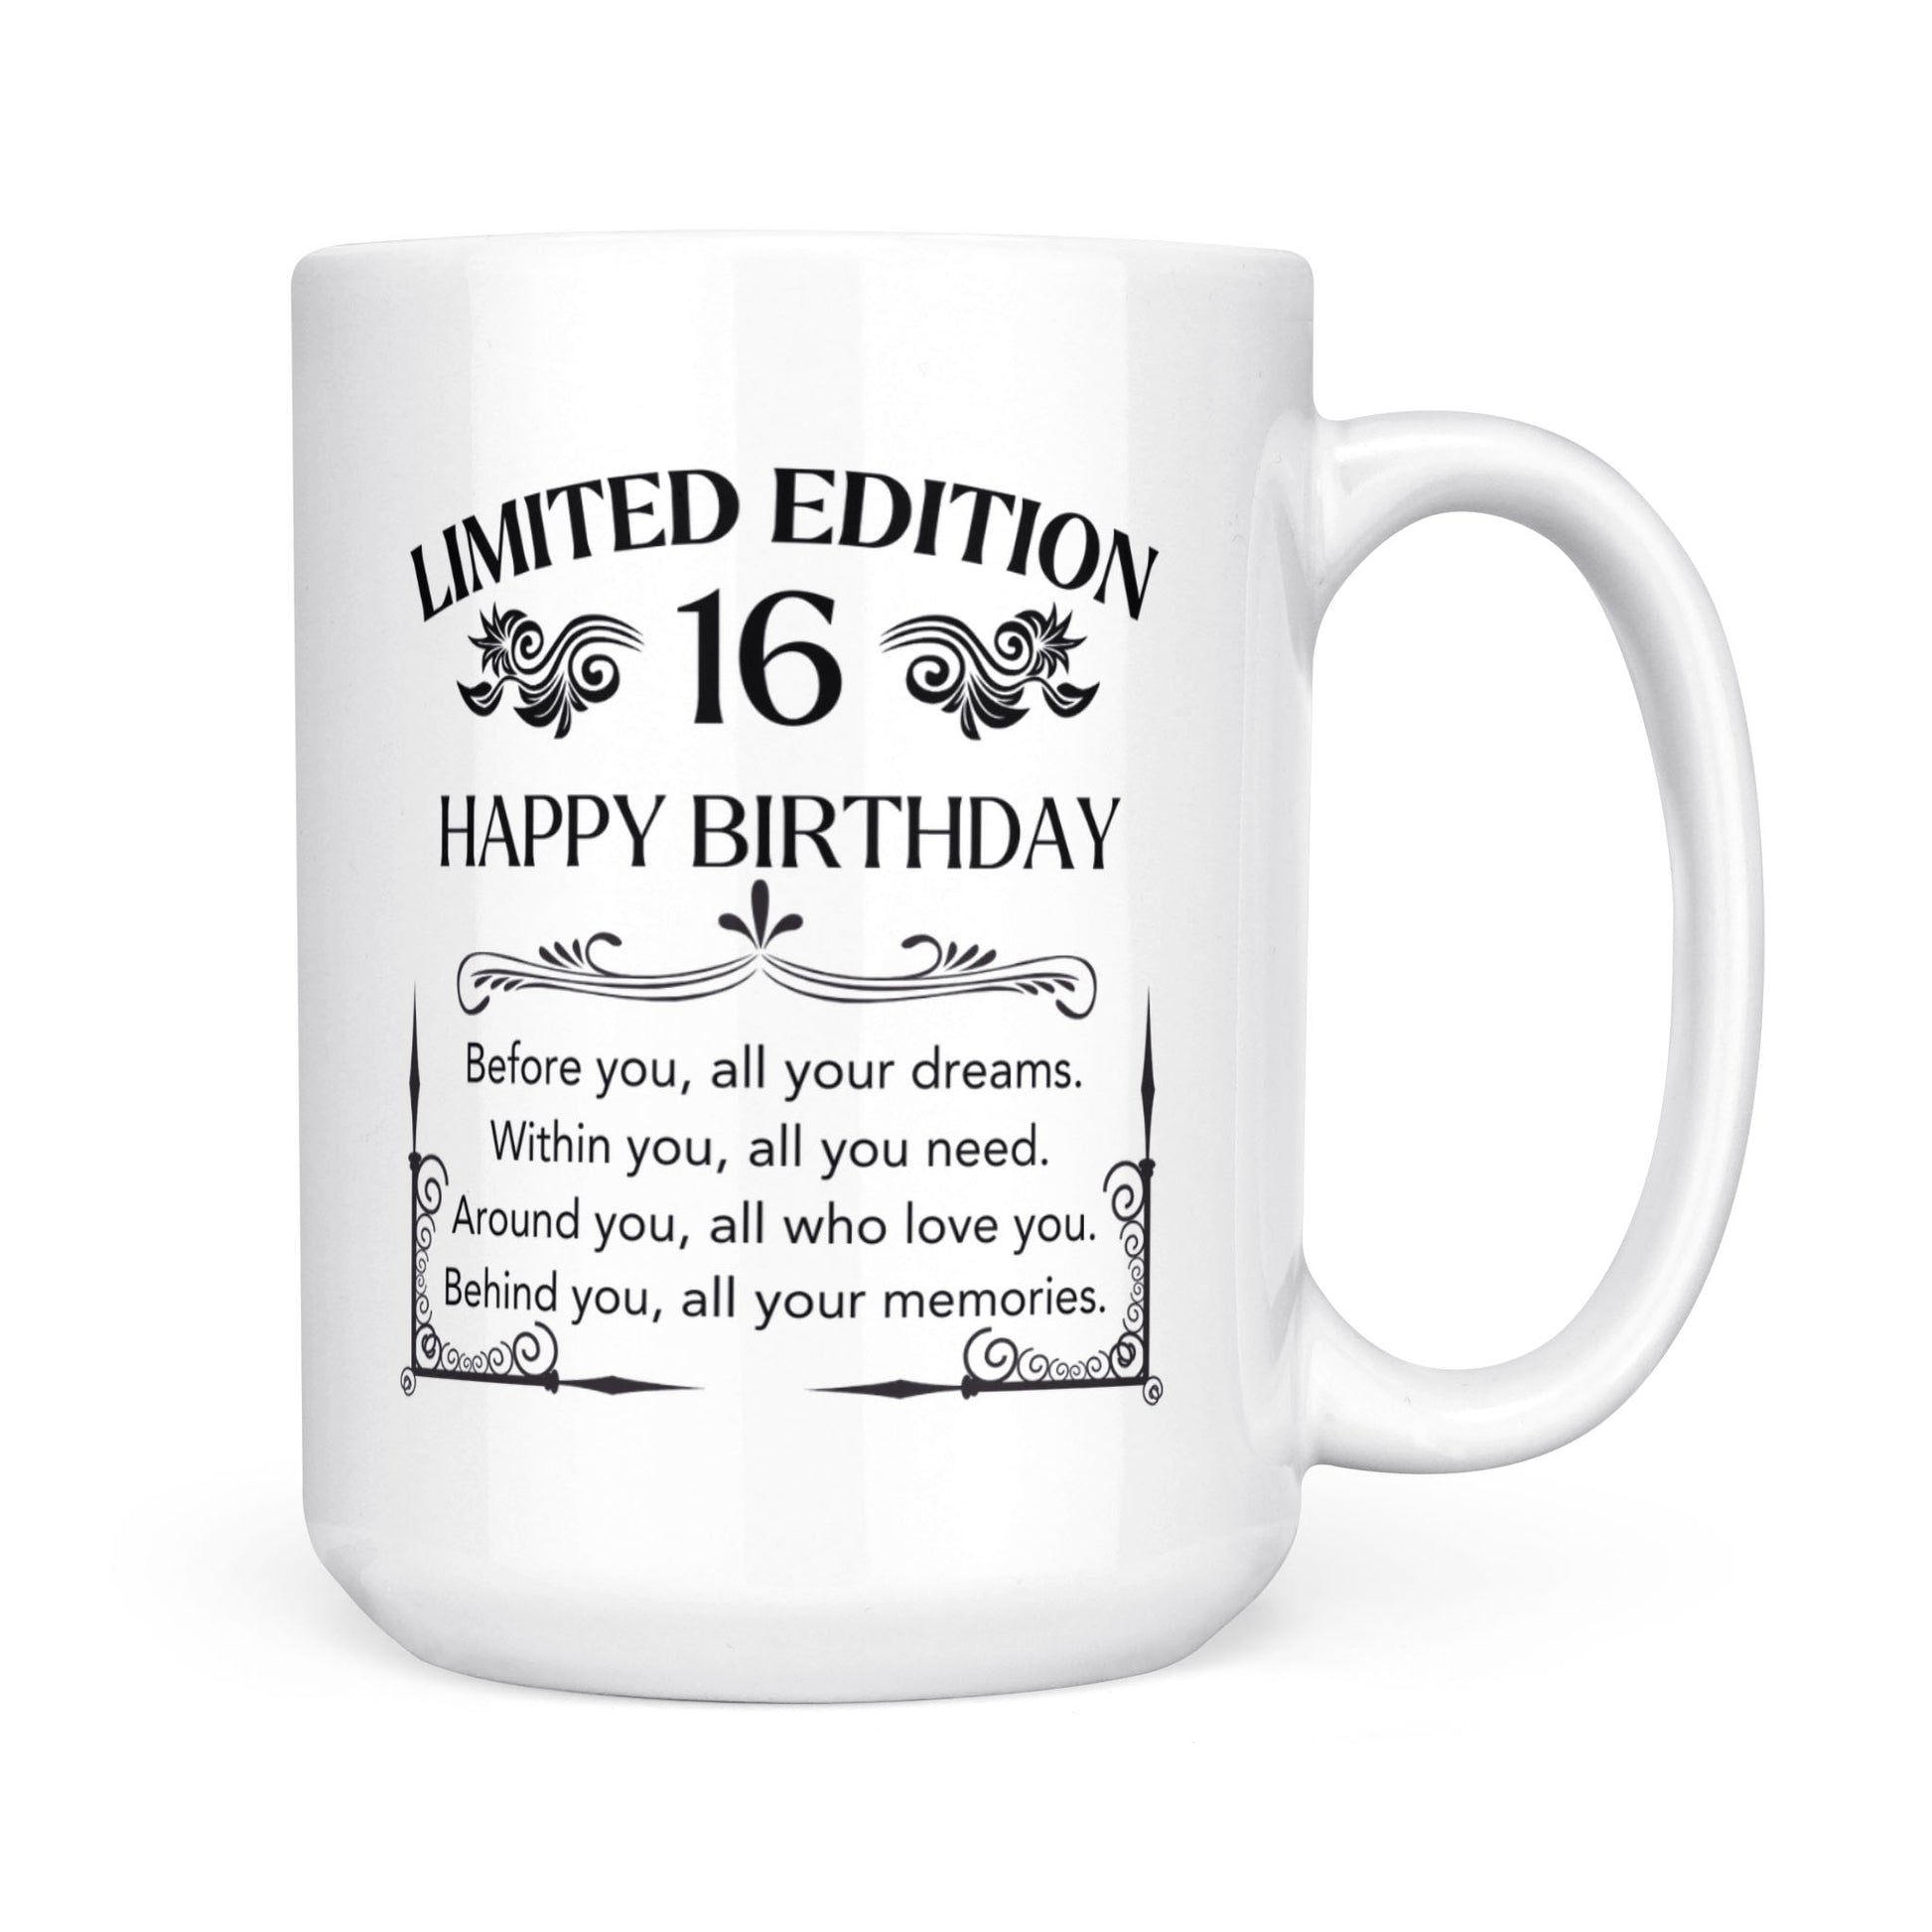 Happy 16 birthday mug for her